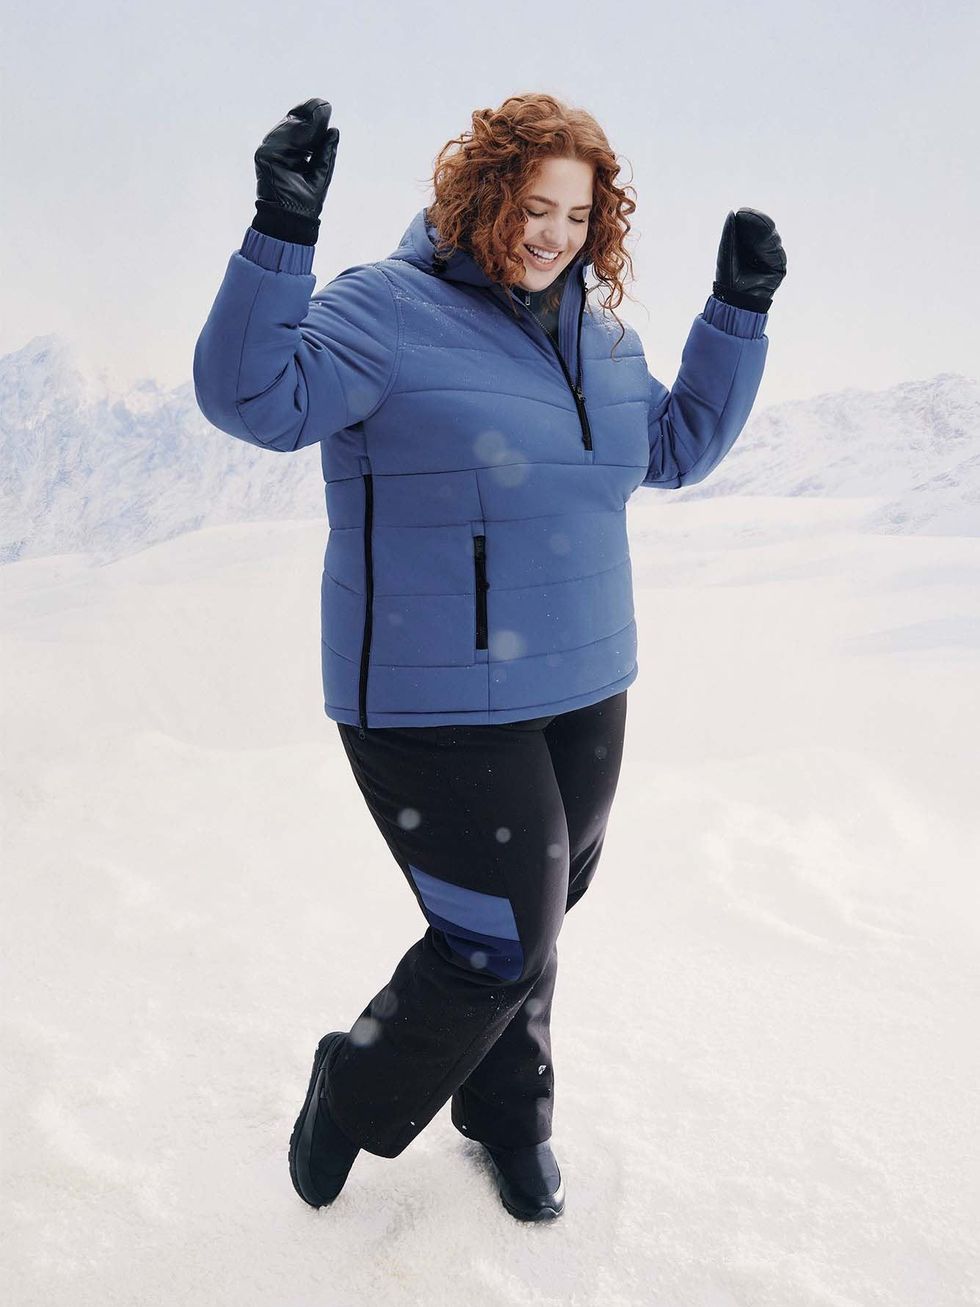 Plus Size Women's Ski Clothing ❄ Curvy Snow Gear for Women